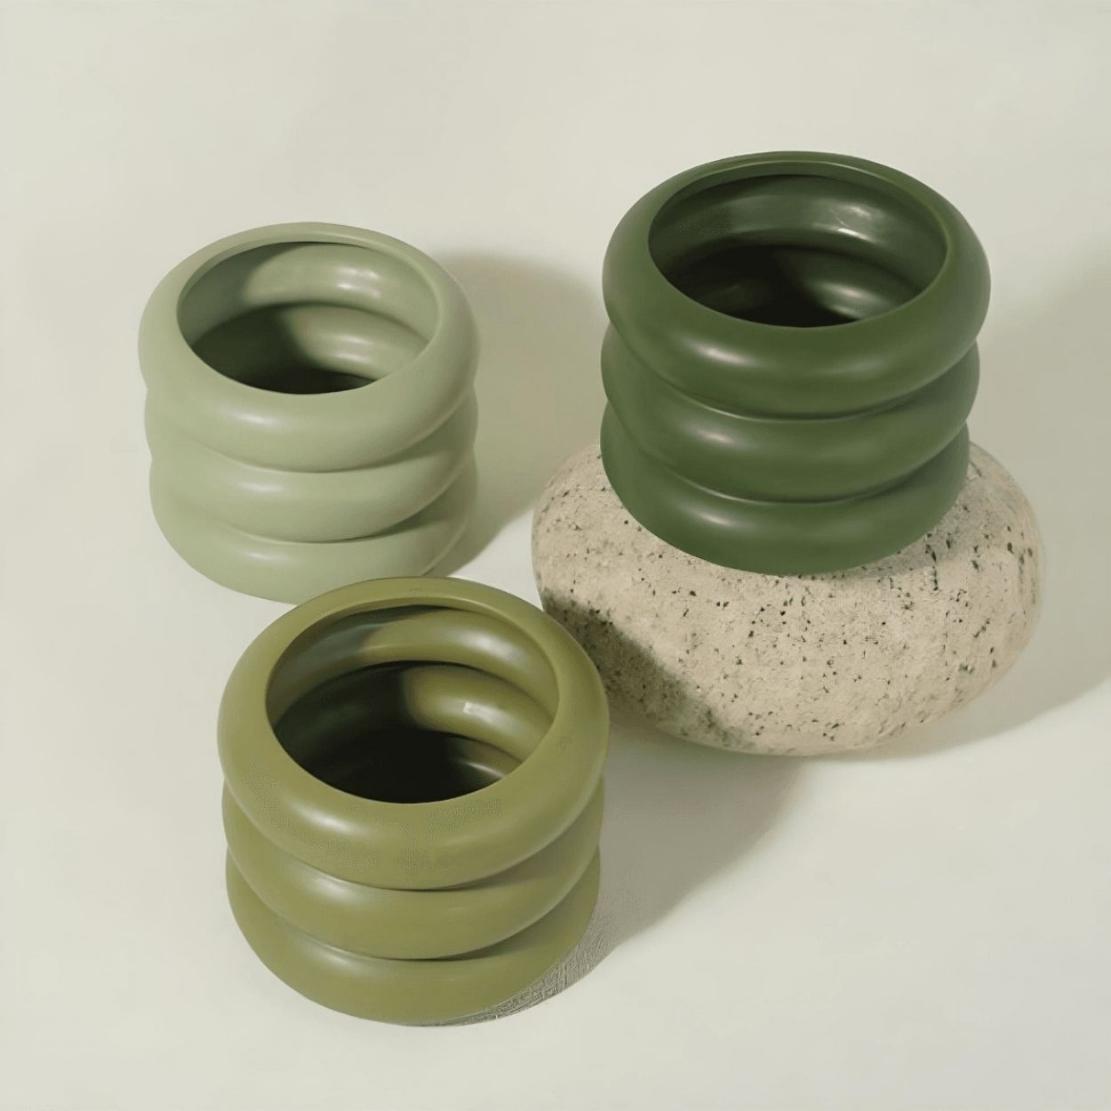 Three shades of green layered donut ceramic flowerpot vases